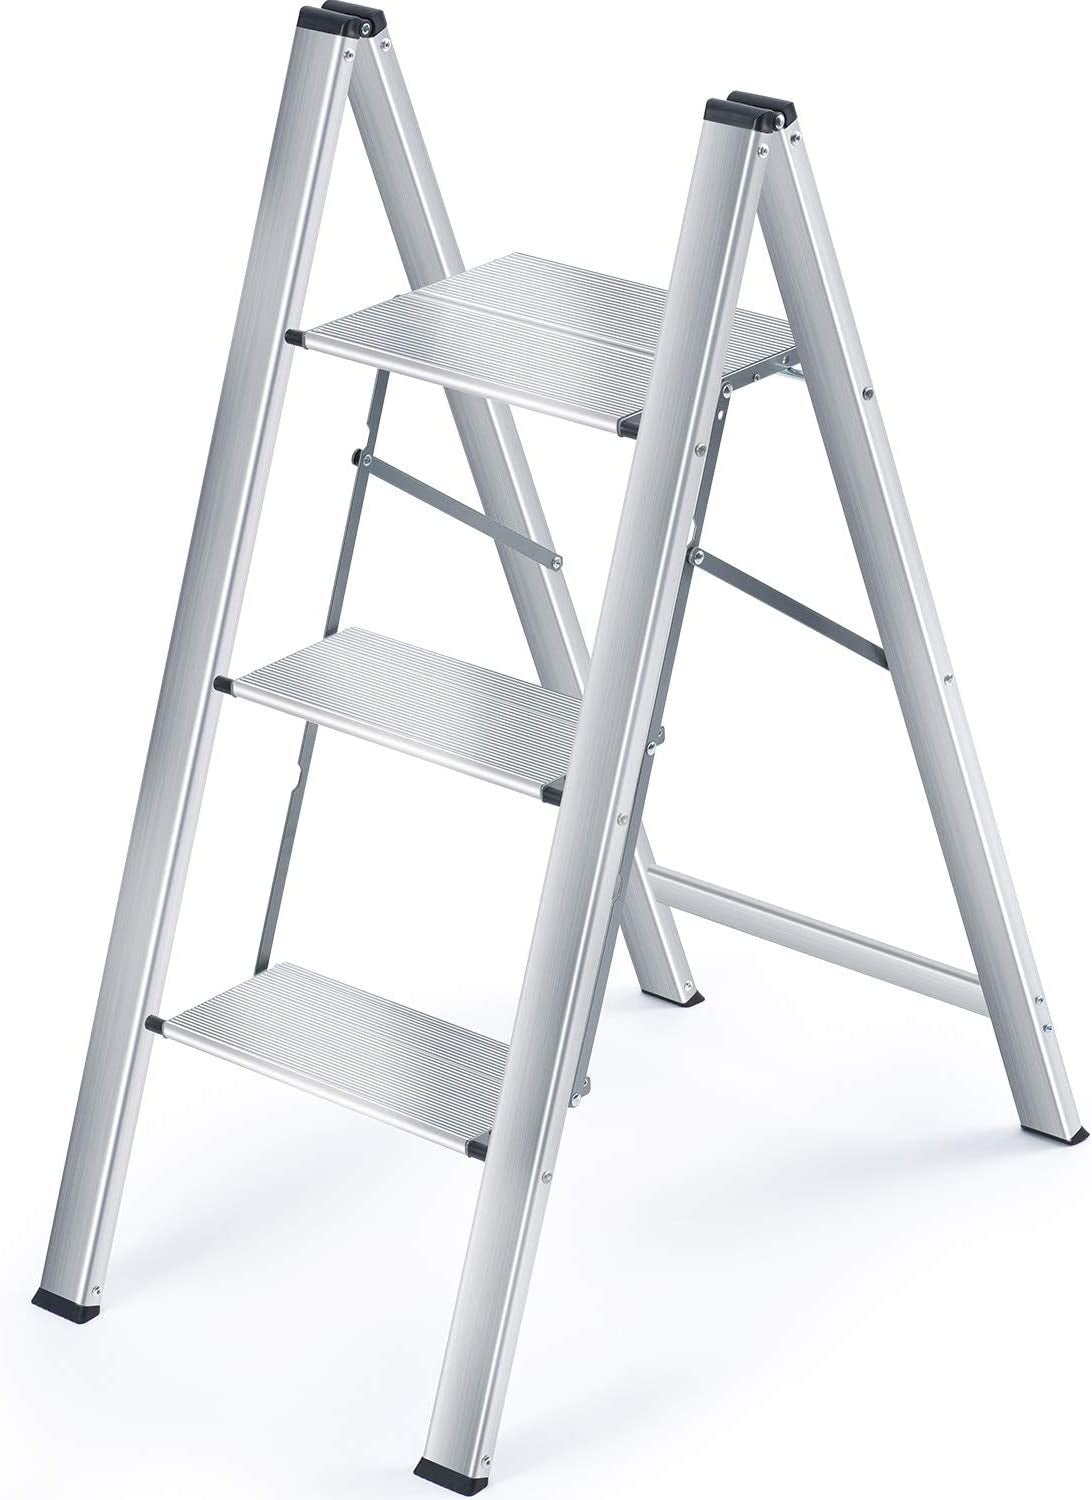 KK KINGRACK, Kingrack Step Ladder, 3 Step Aluminium Folding Step Stool, Portable Ladder with Large Platform,Slim Household Stepladder with Milti-Fuction (3 Step)